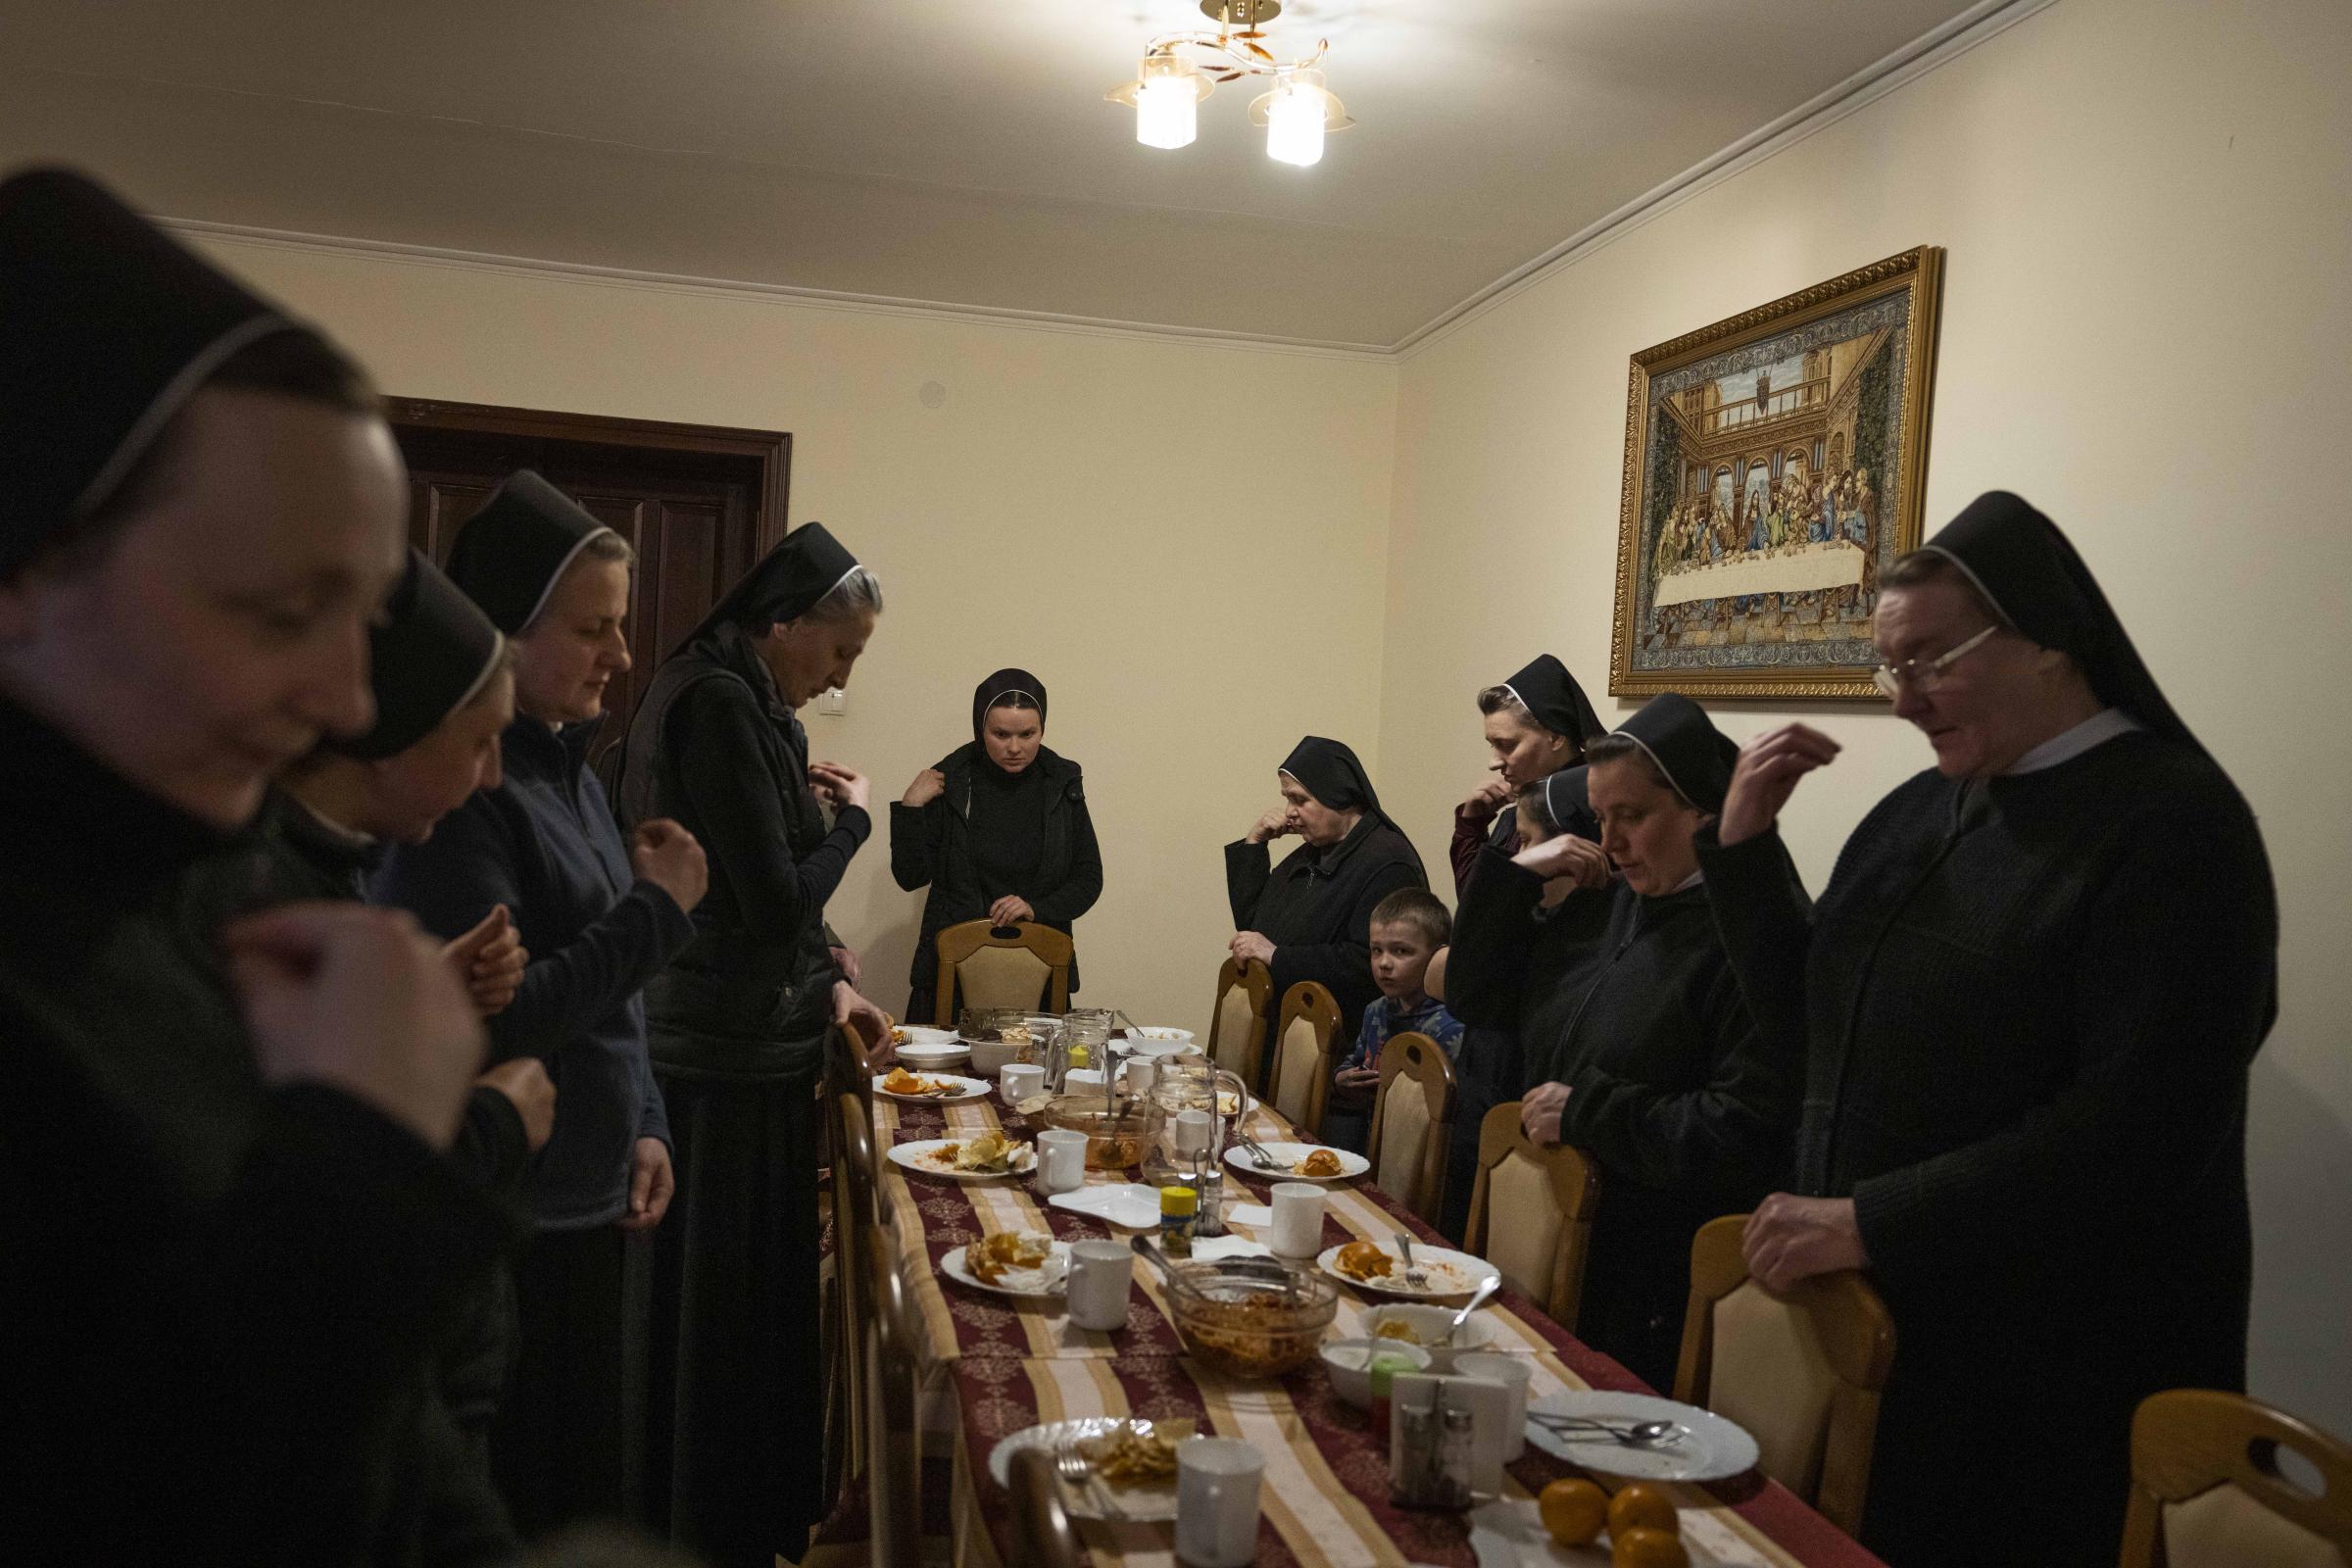 Nuns make prayers after eating dinner.